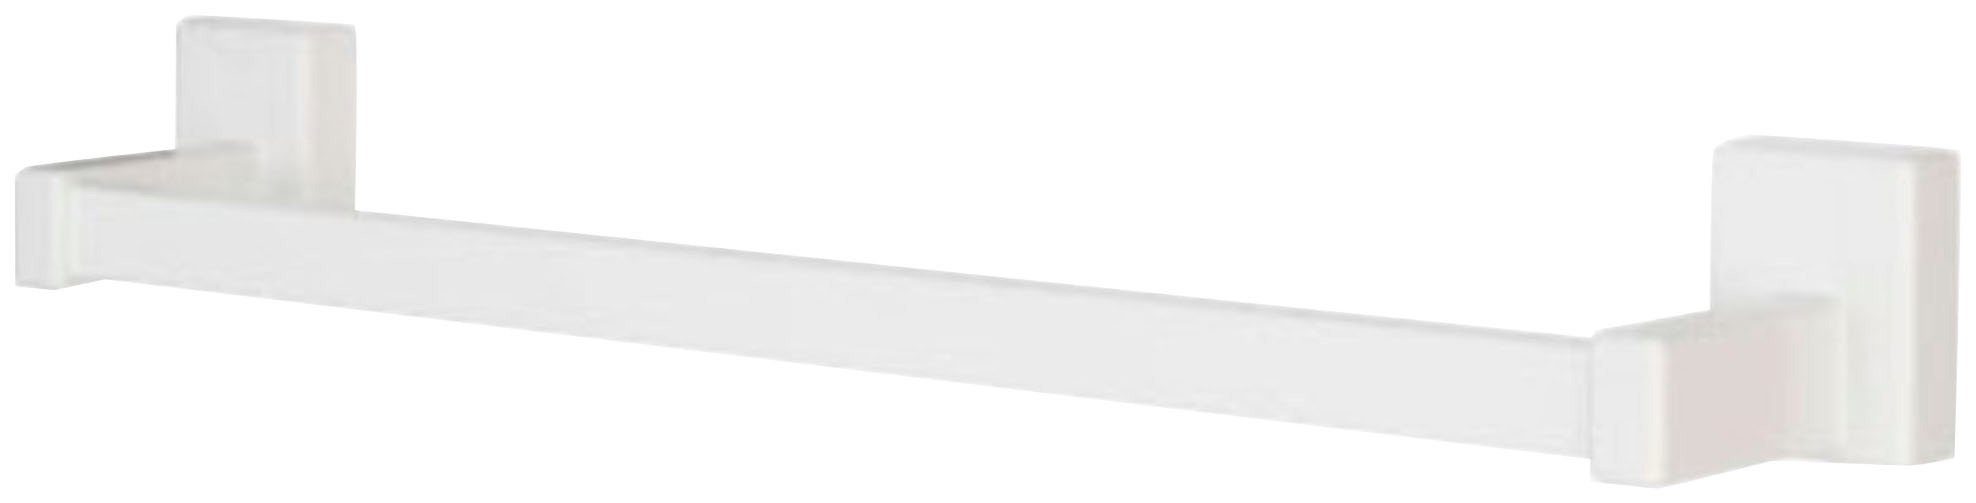 Ximax Handtuchhalter Handtuchstange, magnetisch, Handtuchstange, magnetisch, 500 mm, Weiß